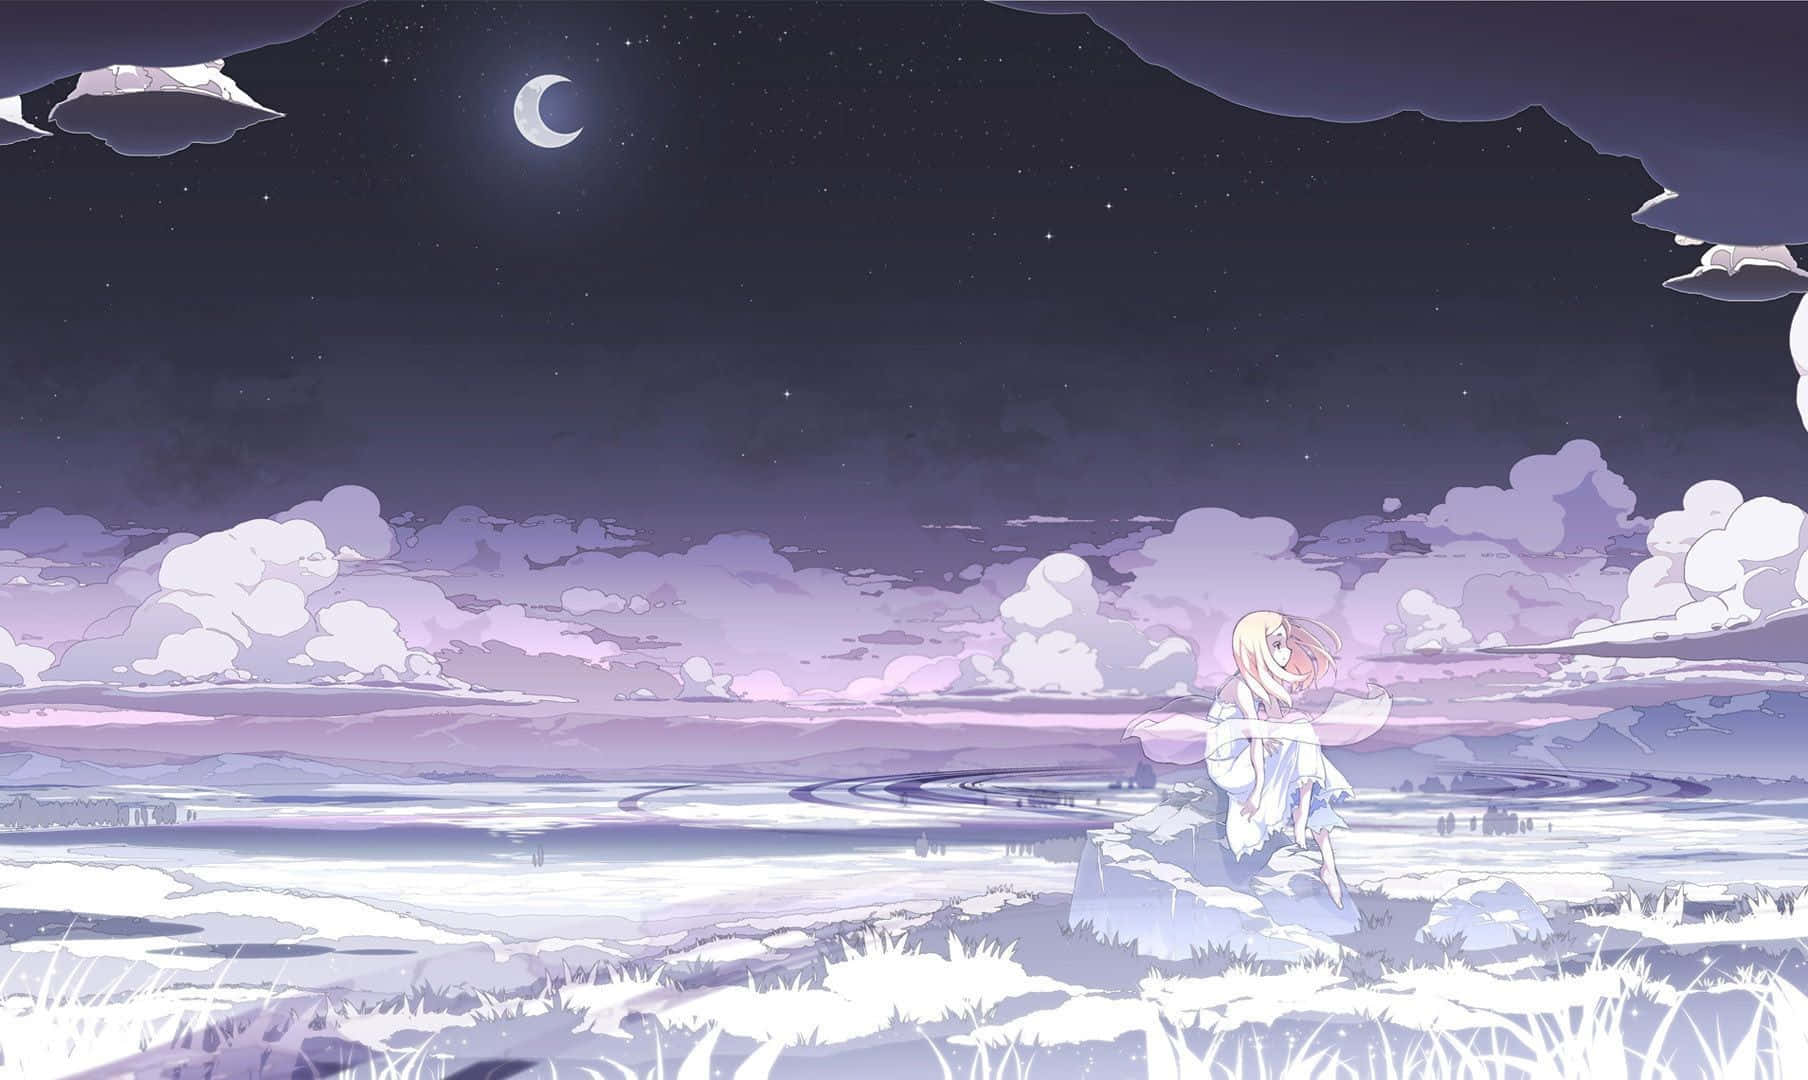 Enchanting Moonlight Over the Sea